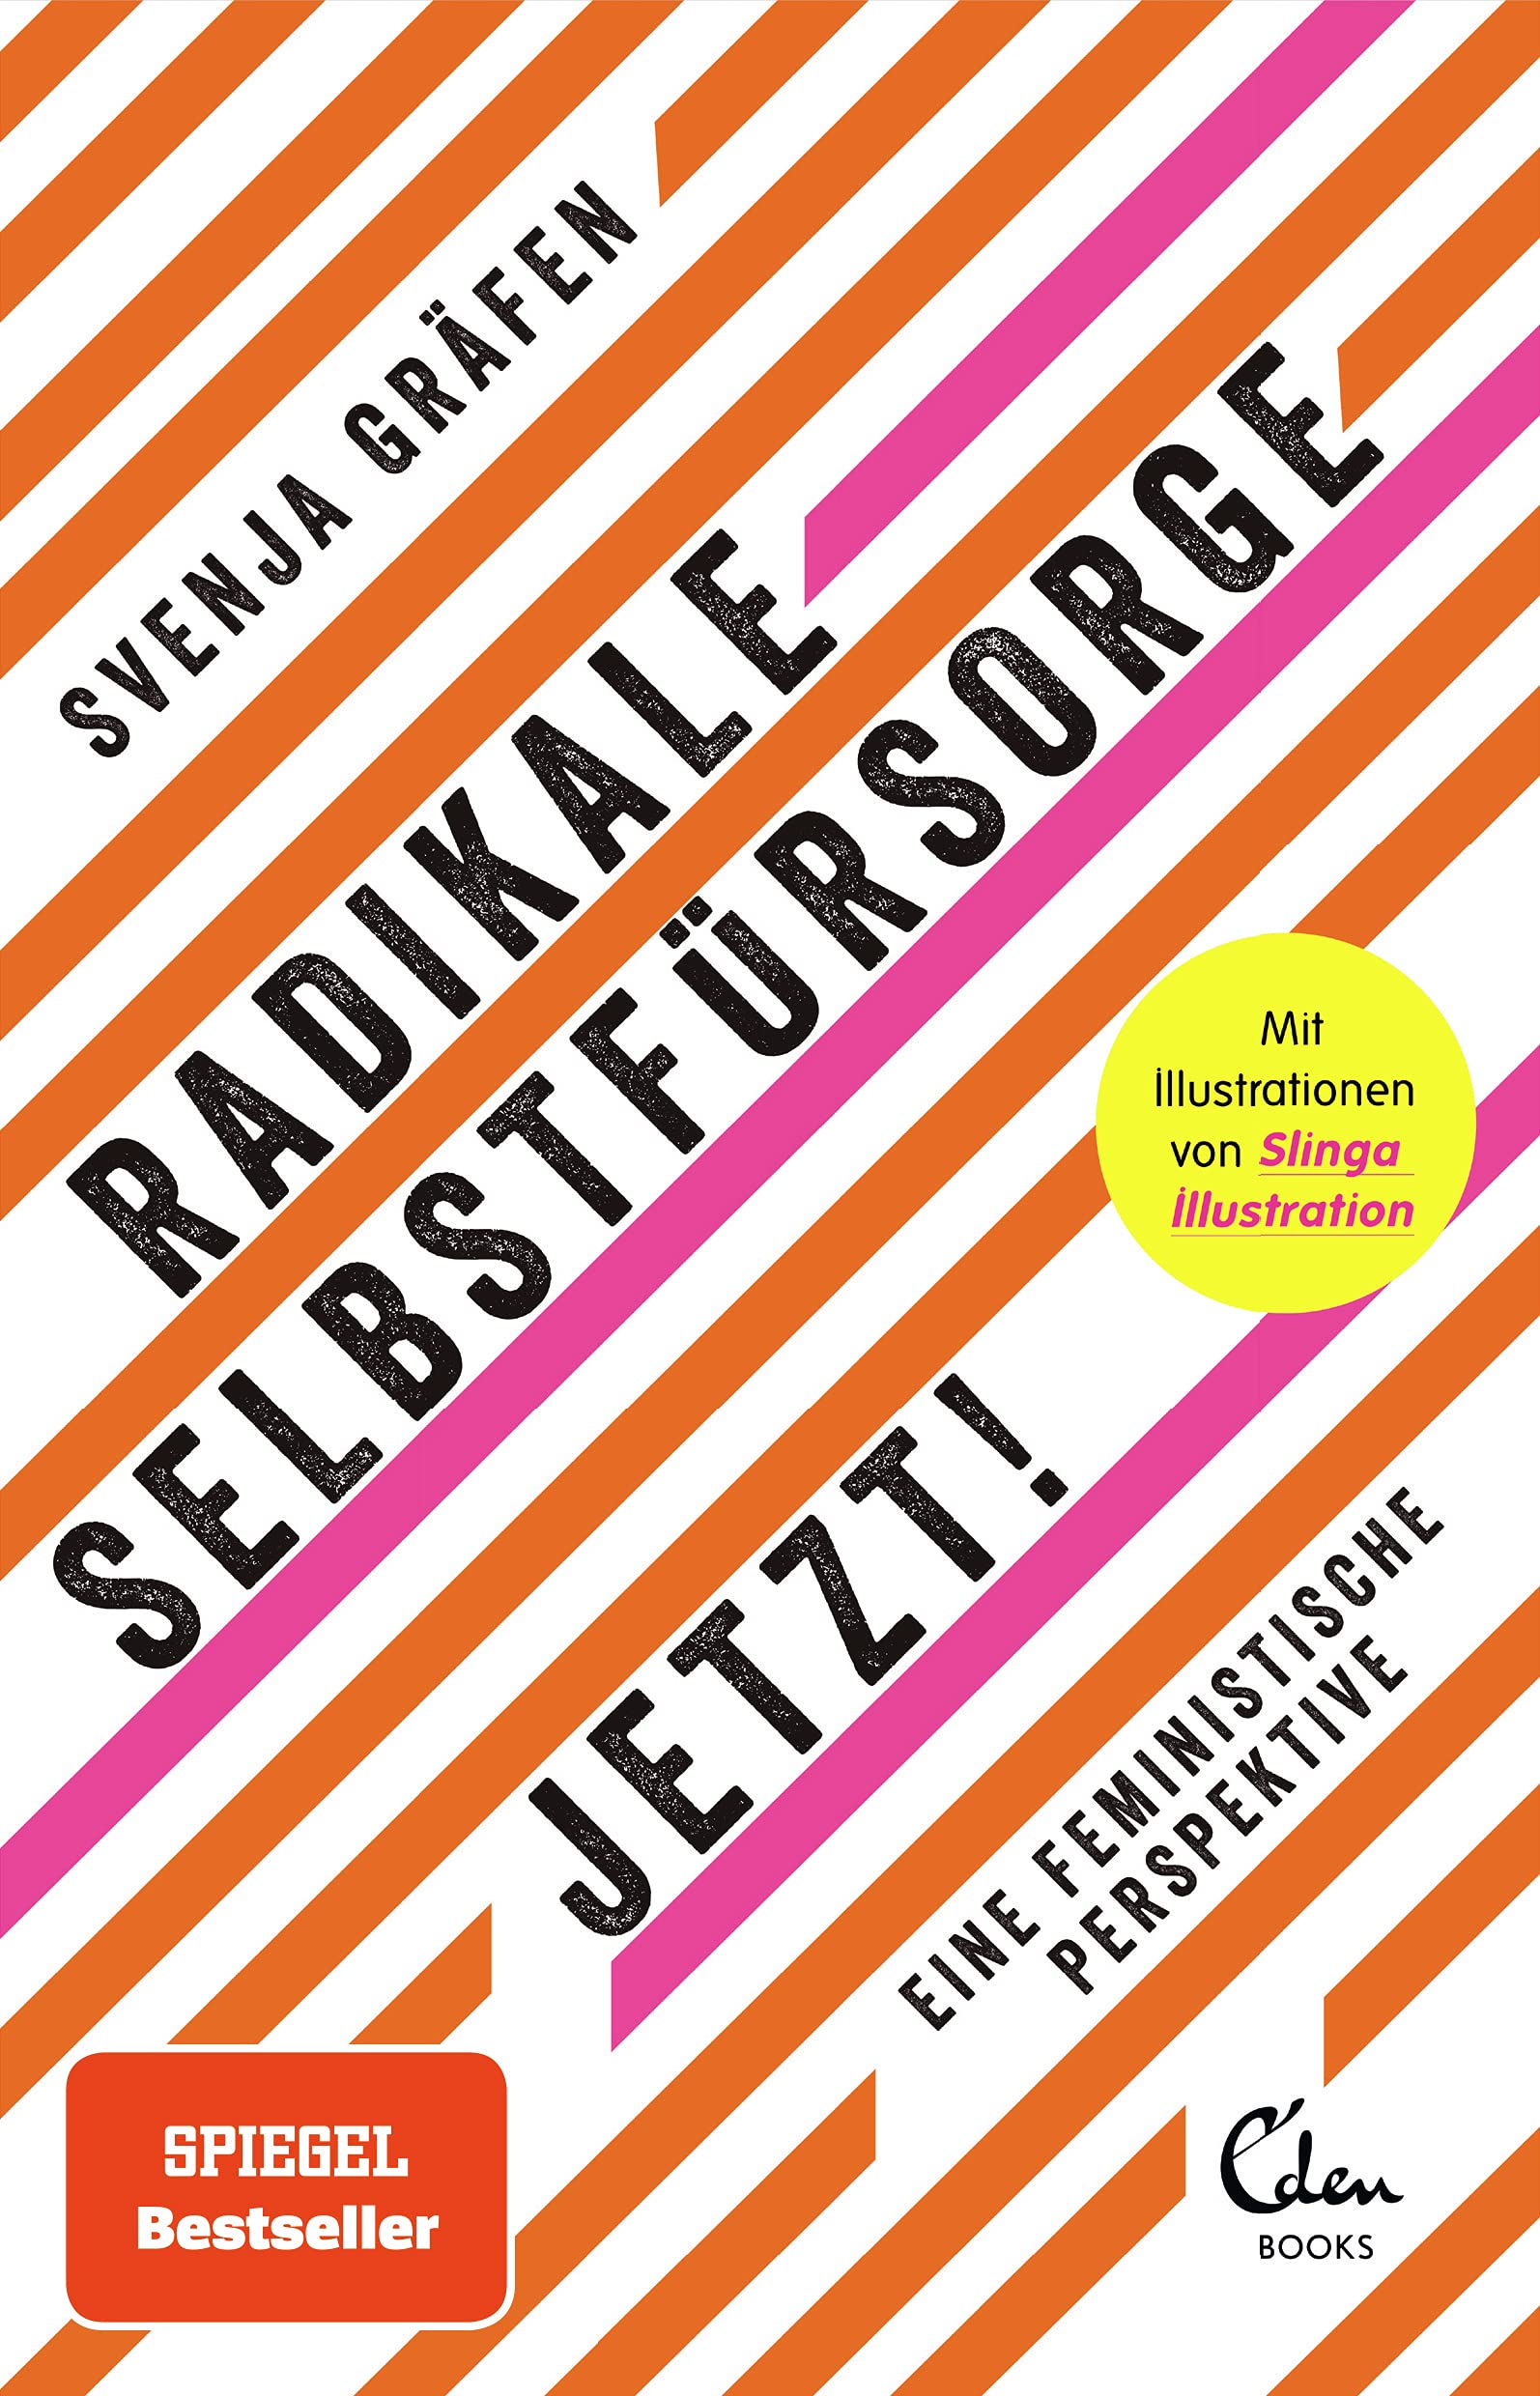 Buchcover: Svenja Gräfen: Radikale Selbstfürsorge. Jetzt!